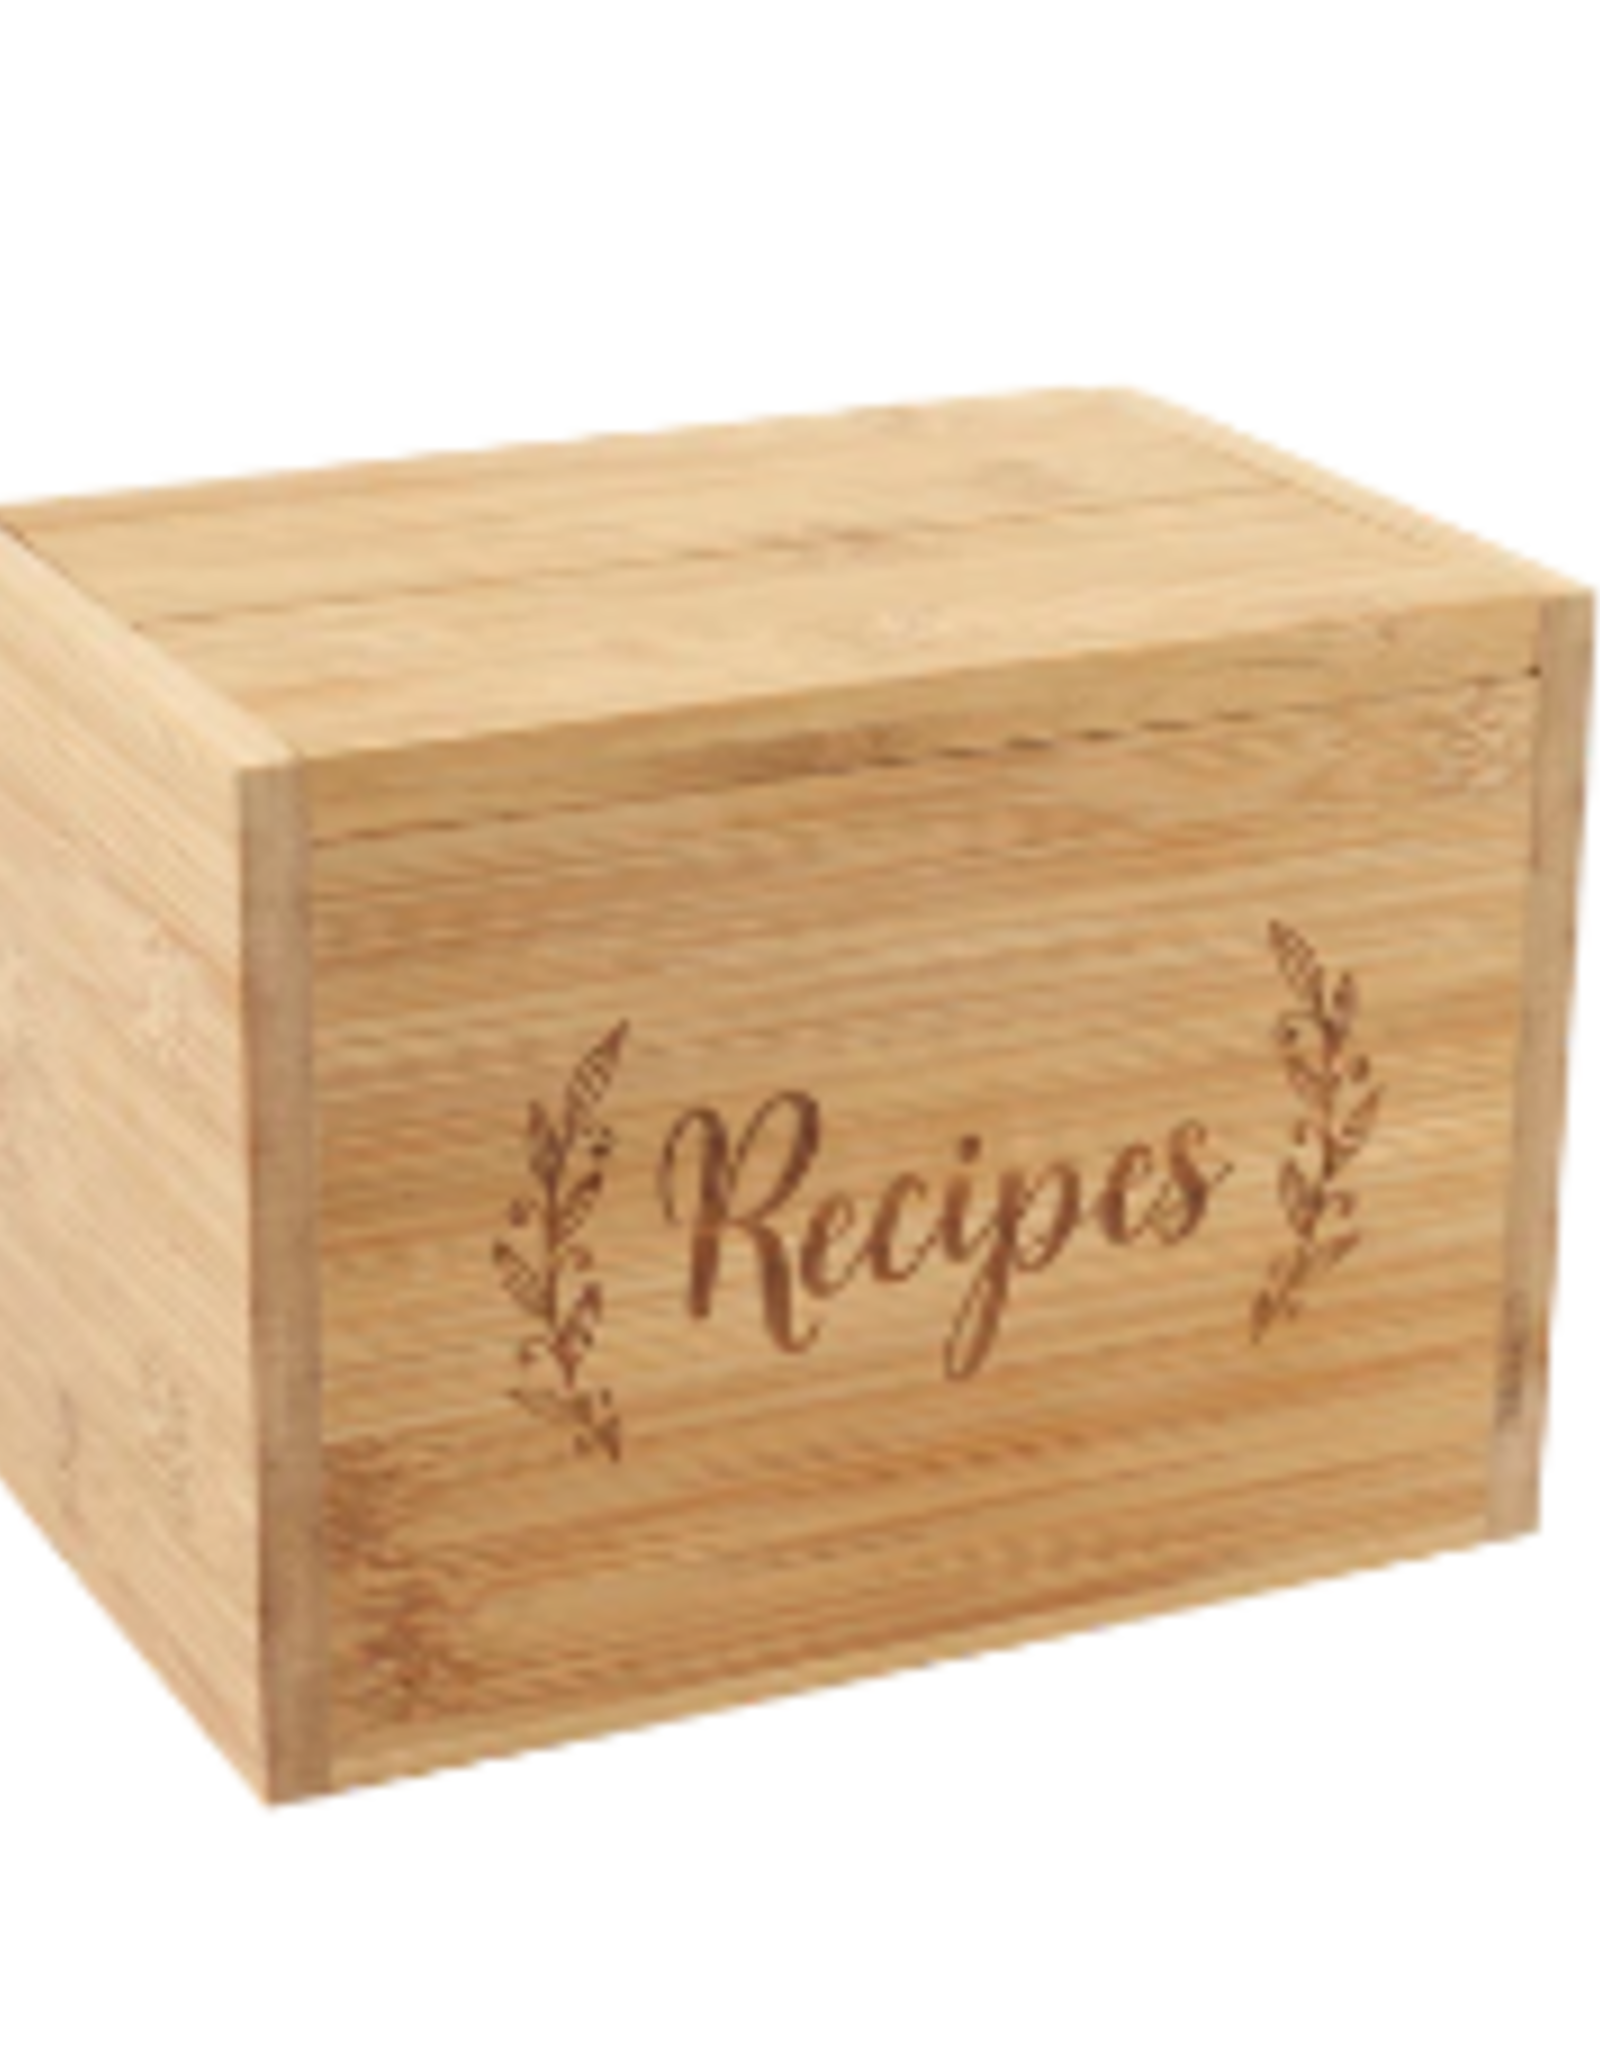 Peter Pauper Press Bambu Recipe Box set